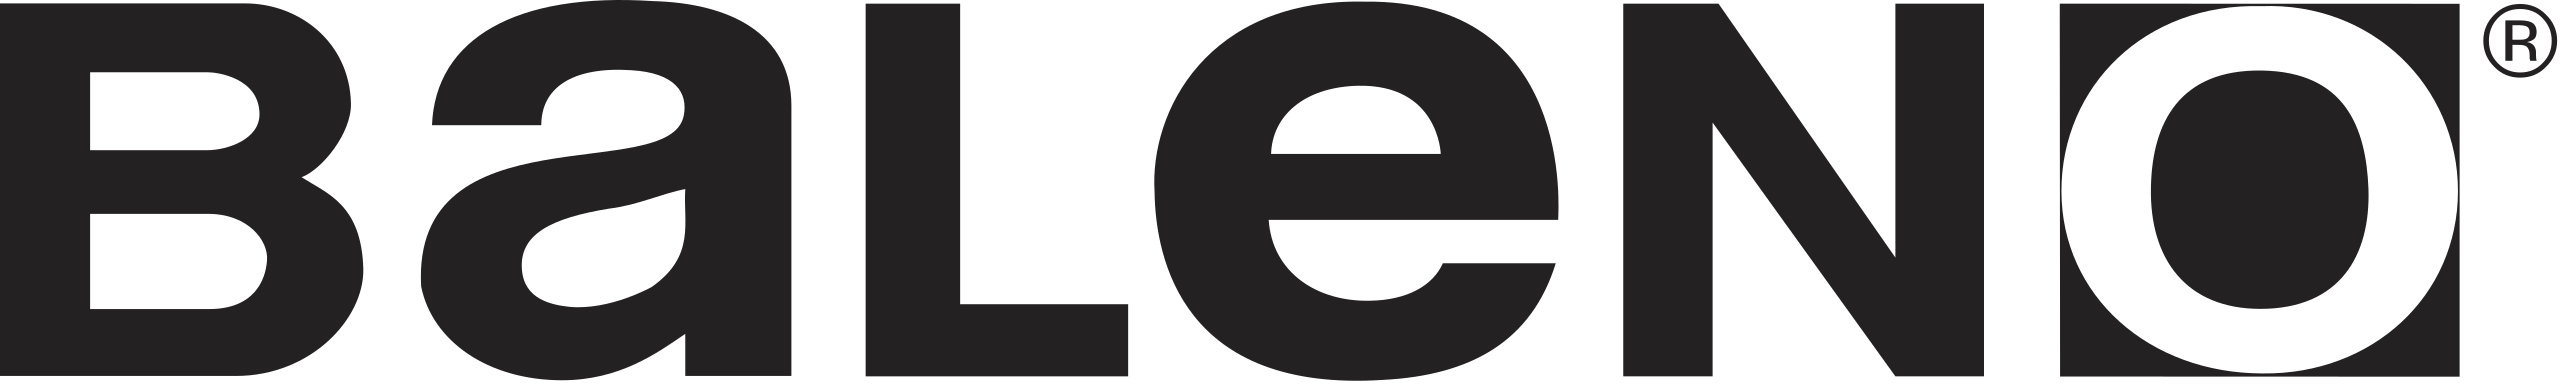 Balenciaga Logo and sign, new logo meaning and history, PNG, SVG